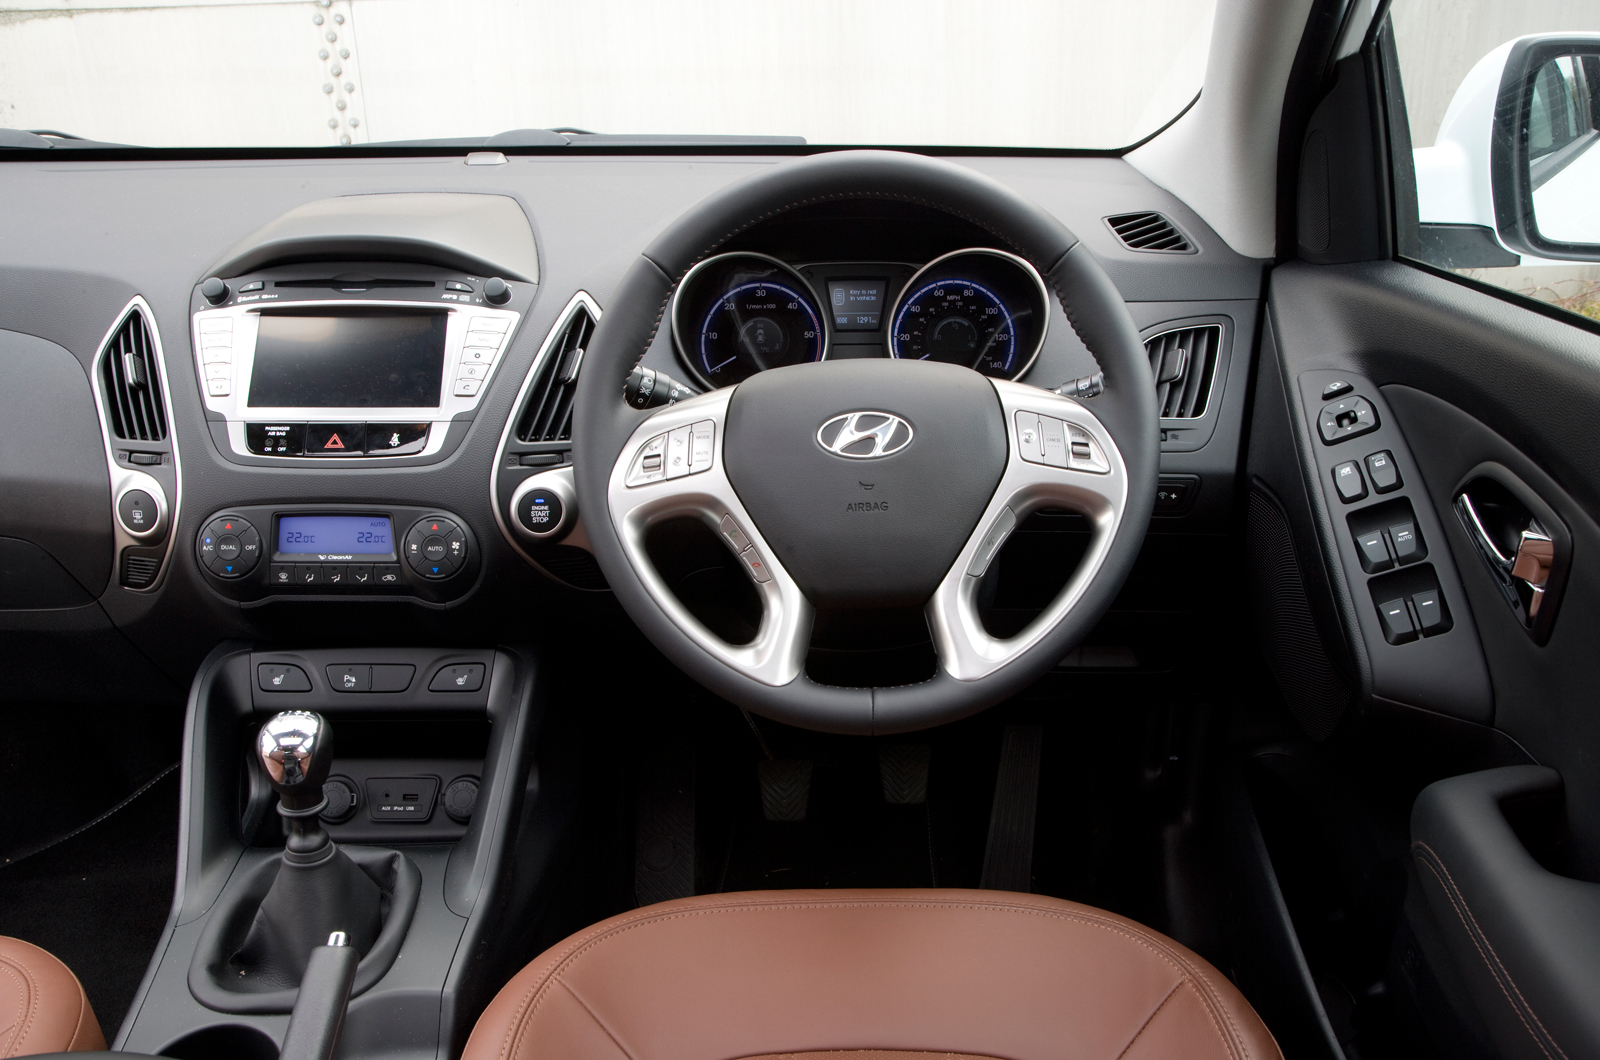 Used Hyundai ix35 2010-2015 review